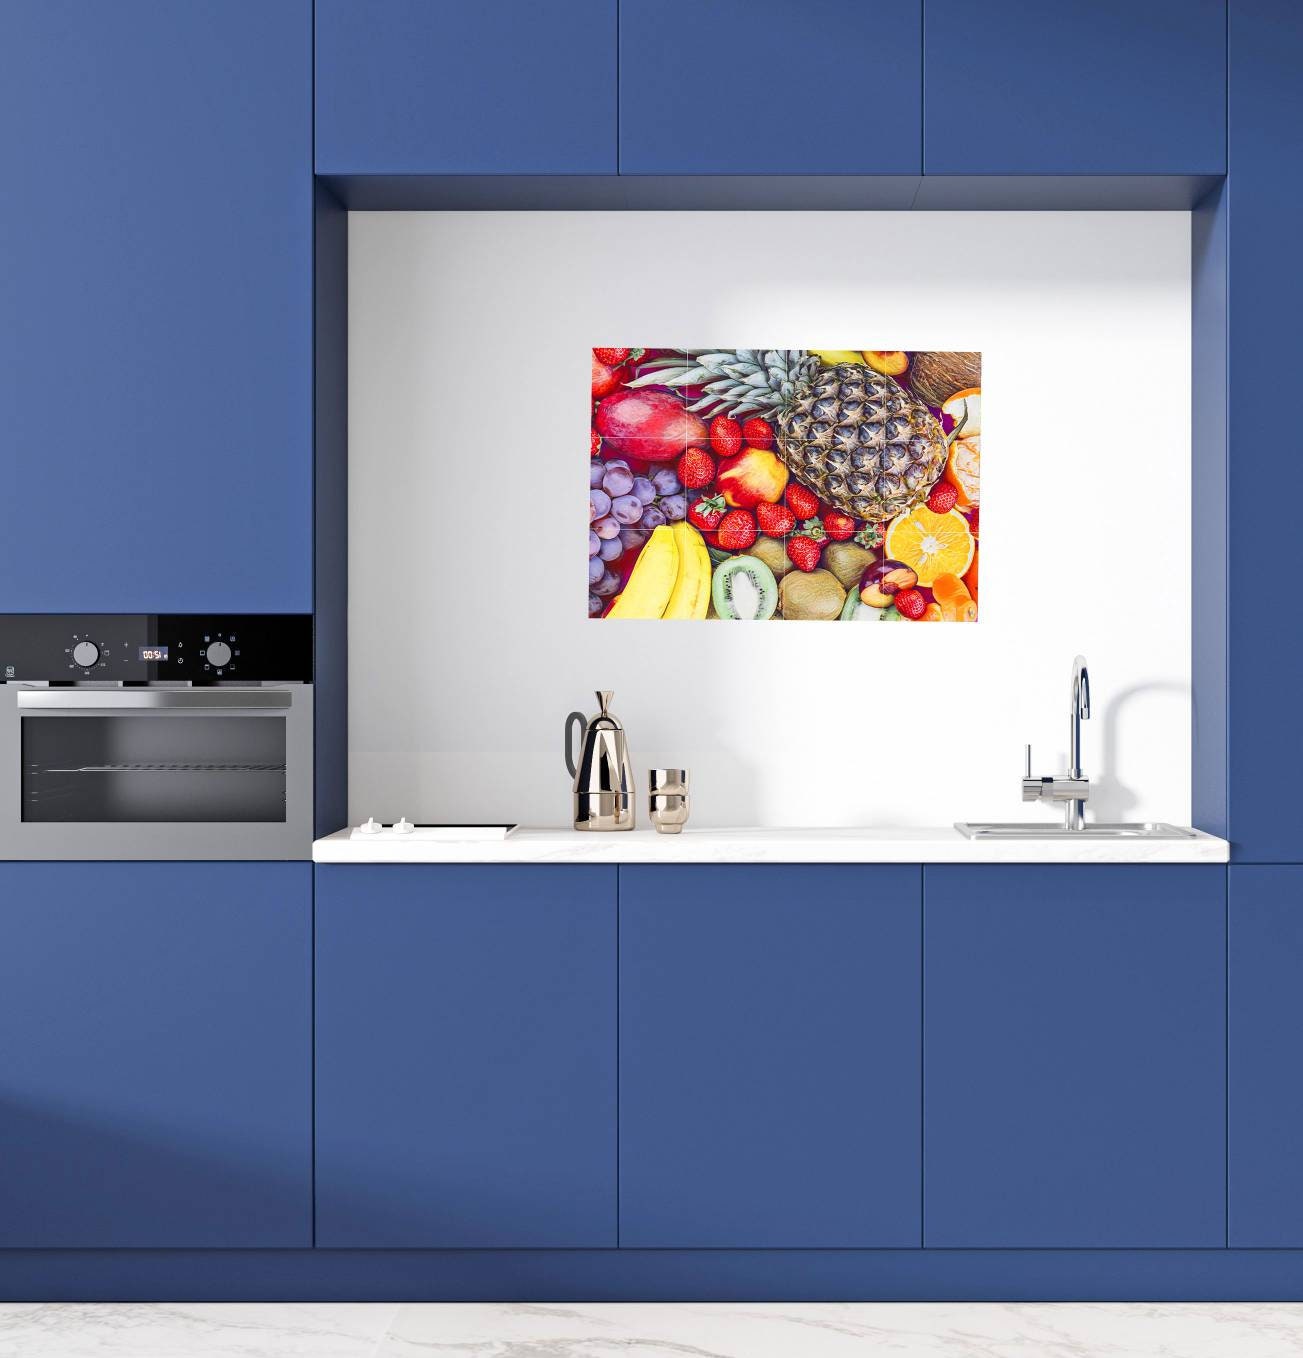 Tile Mural/mosaic Ceramic Panel of Fruits Kitchen Wall Art | Etsy